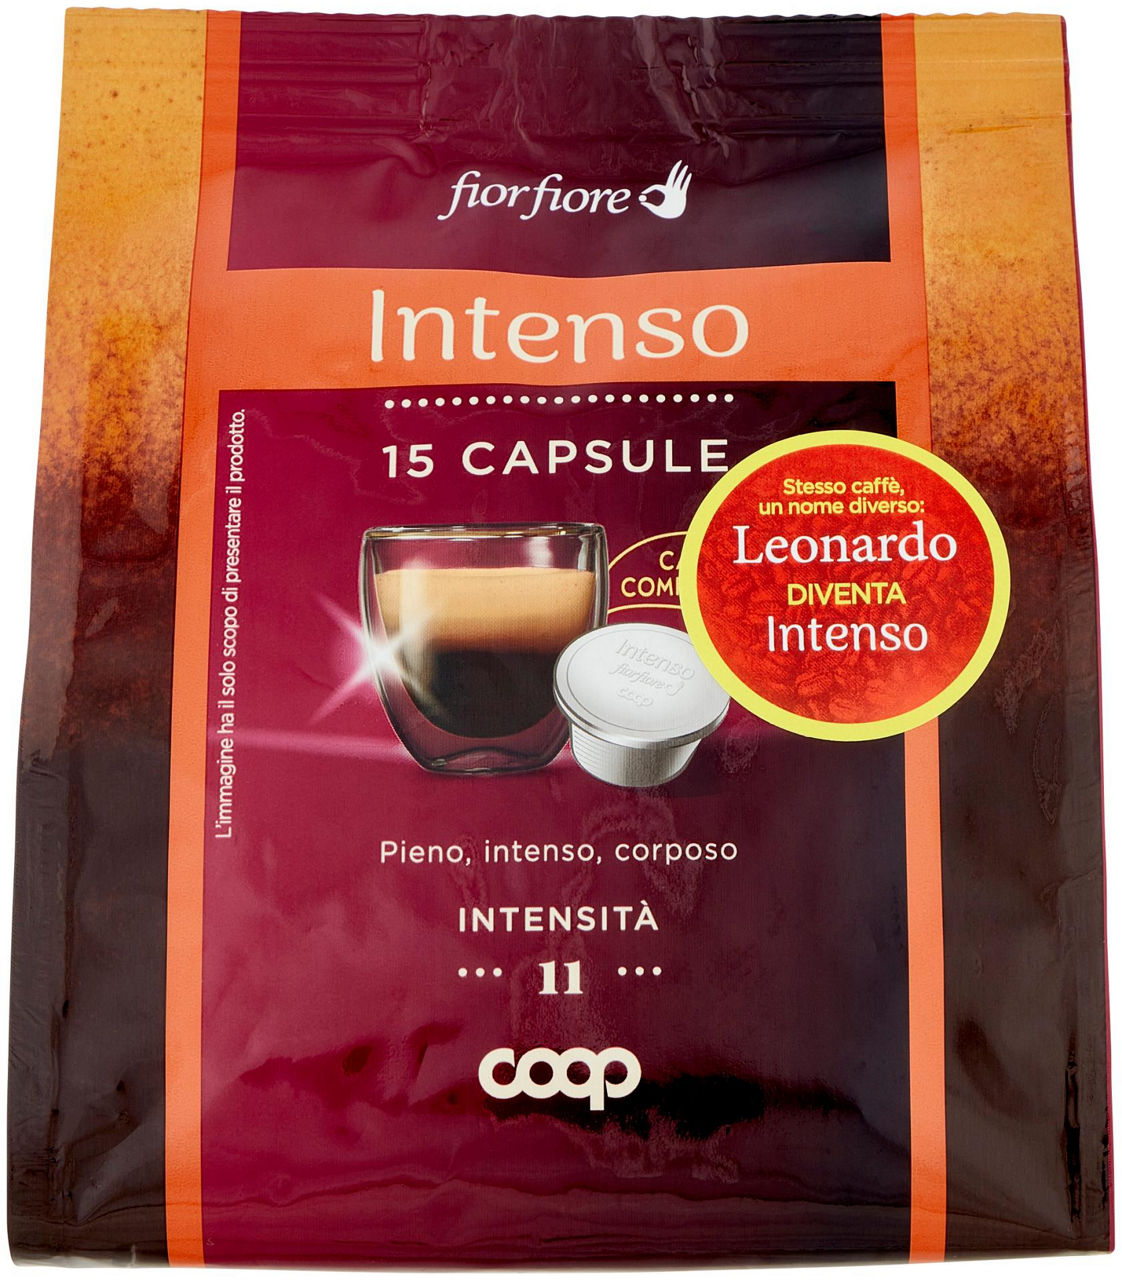 Caffe' intenso in capsule compostabili "leonardo" fior fiore coop pz 15 g 95